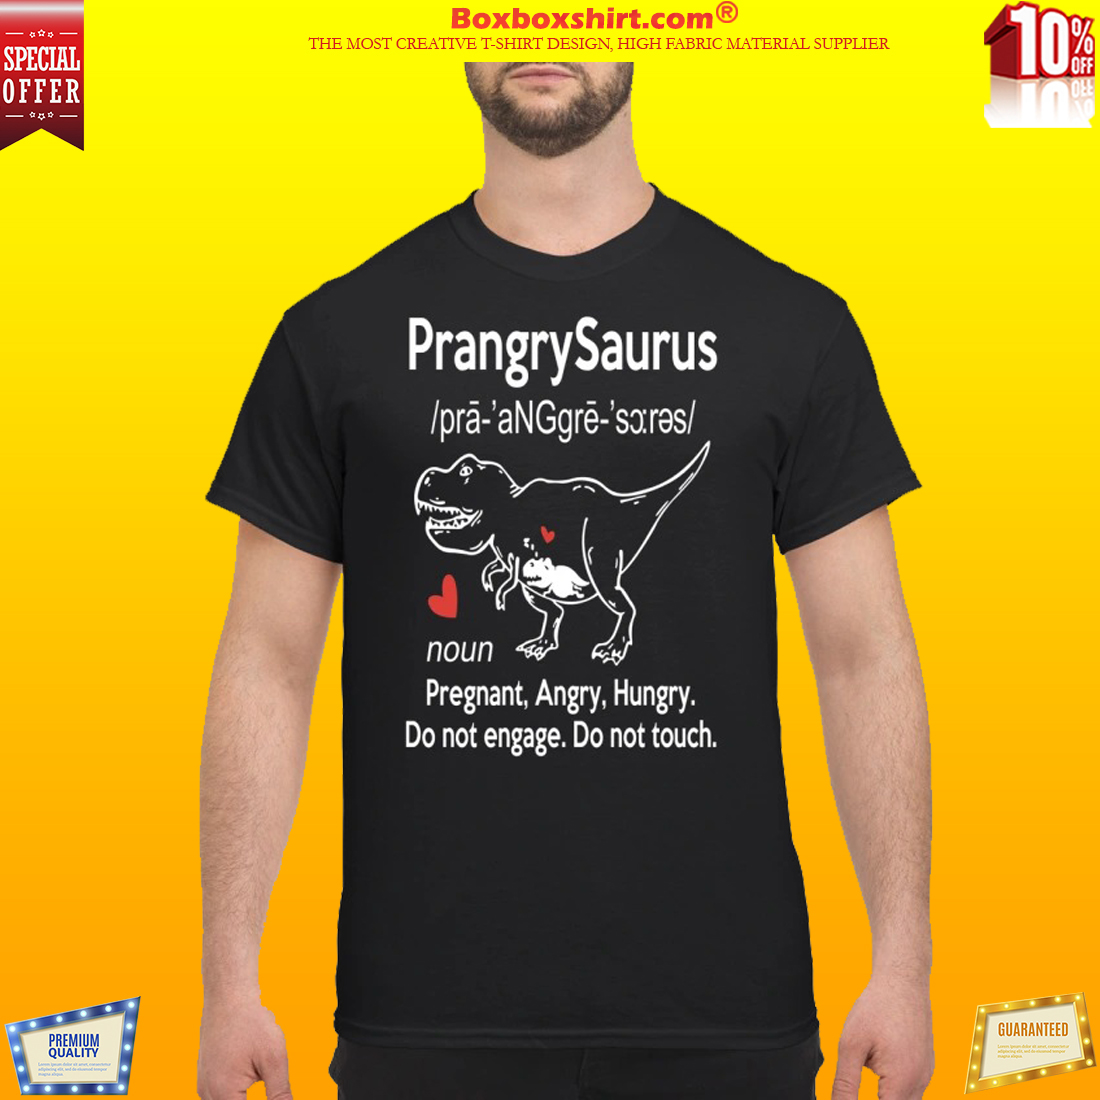 Prangrysaurus defination pregnaut angry hungry classic shirt